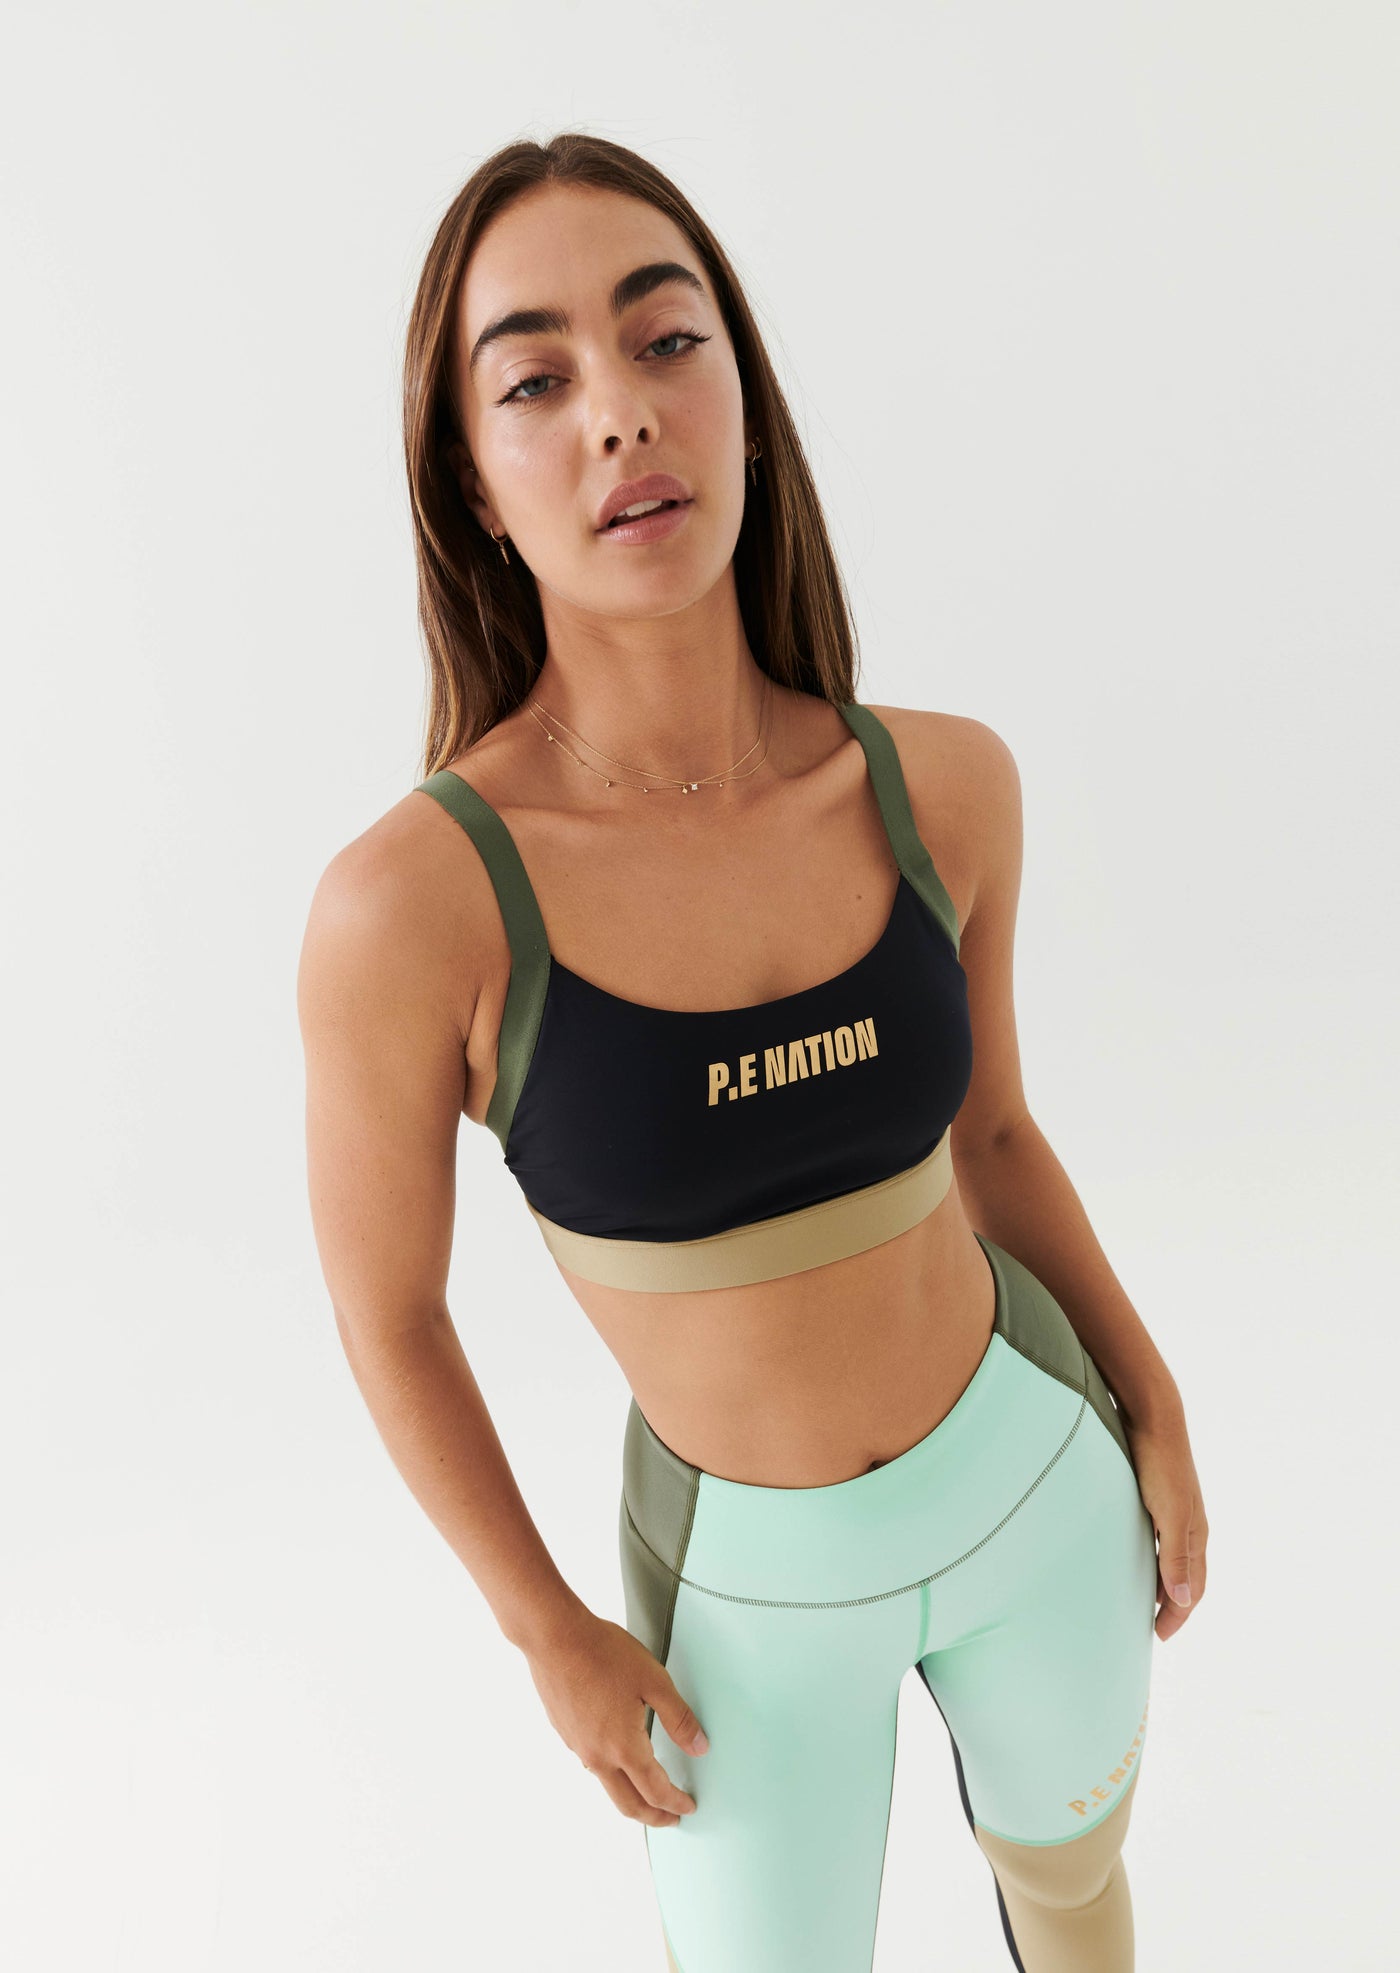 Nike Fit Dry Women's Racerback Sports Bra Size Large Black - $22 - From  Katie